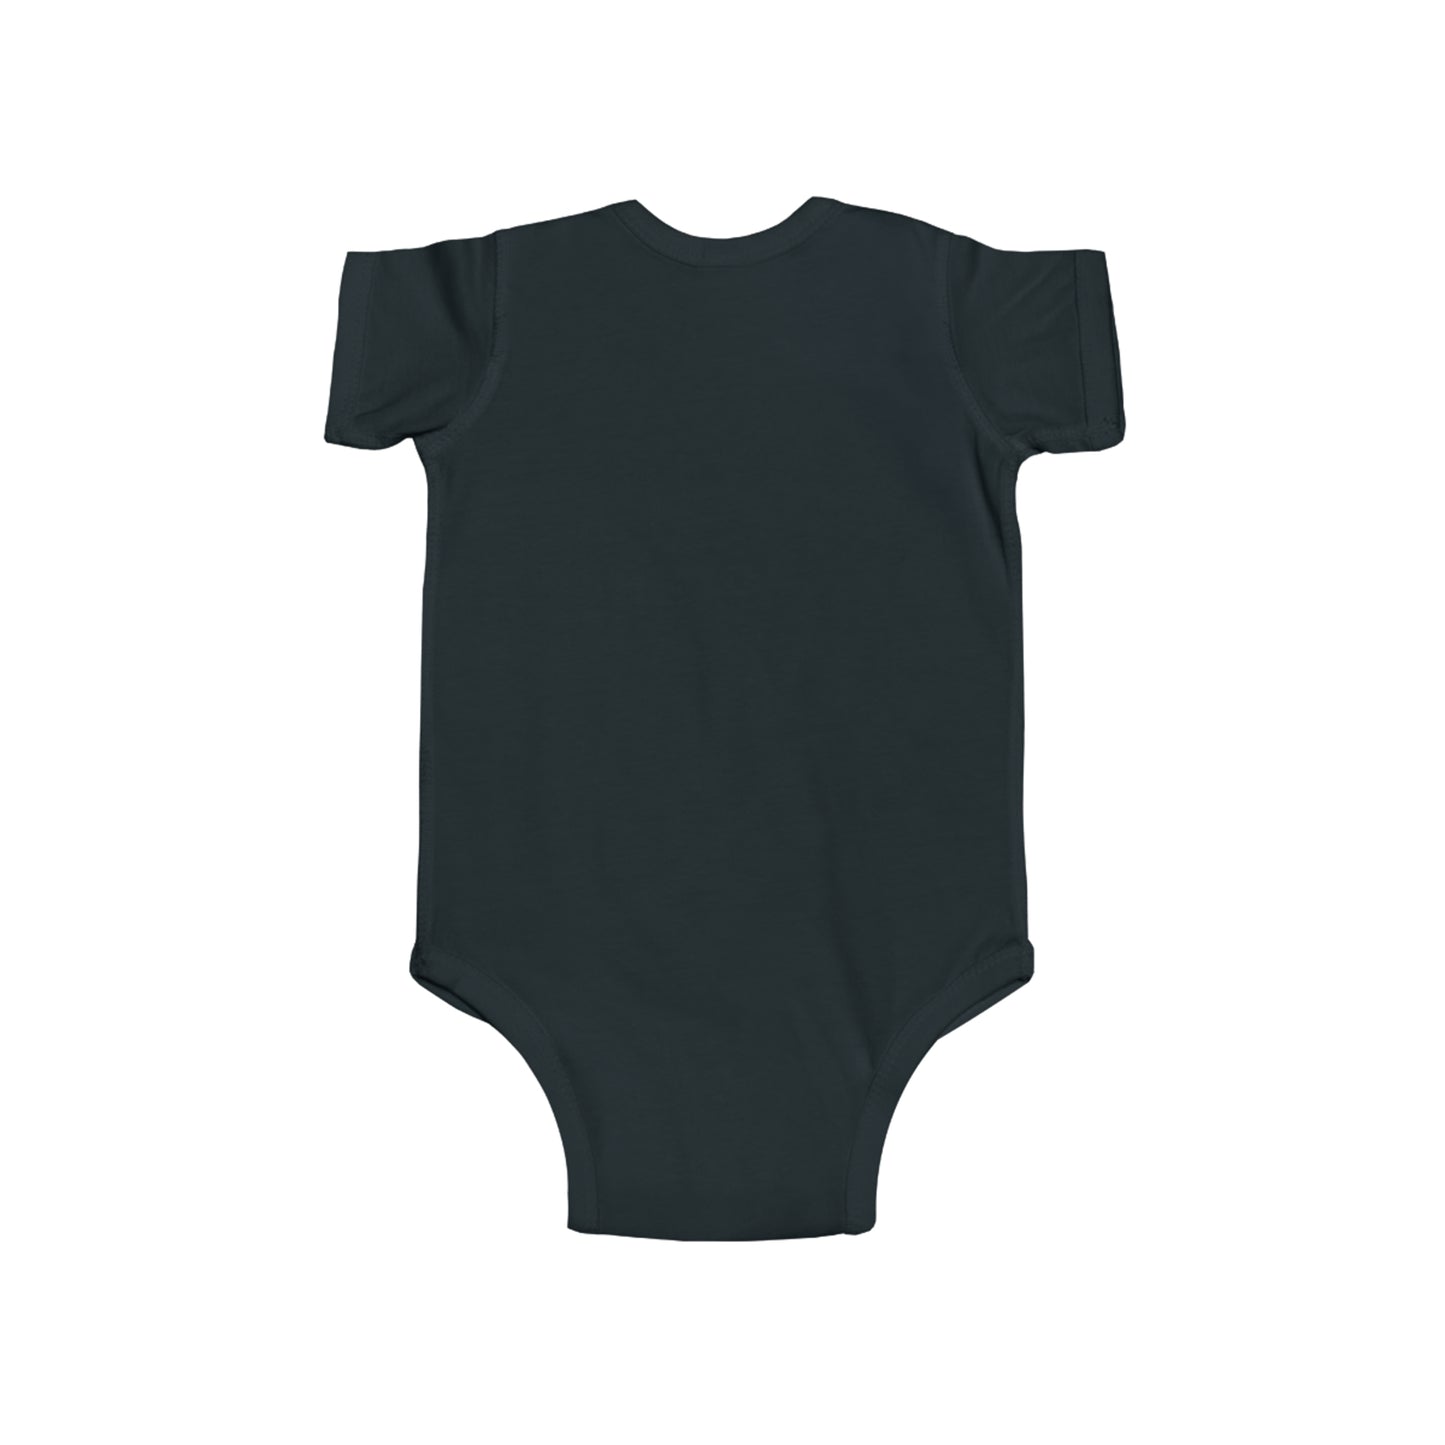 Baby Highlander Infant bodysuit